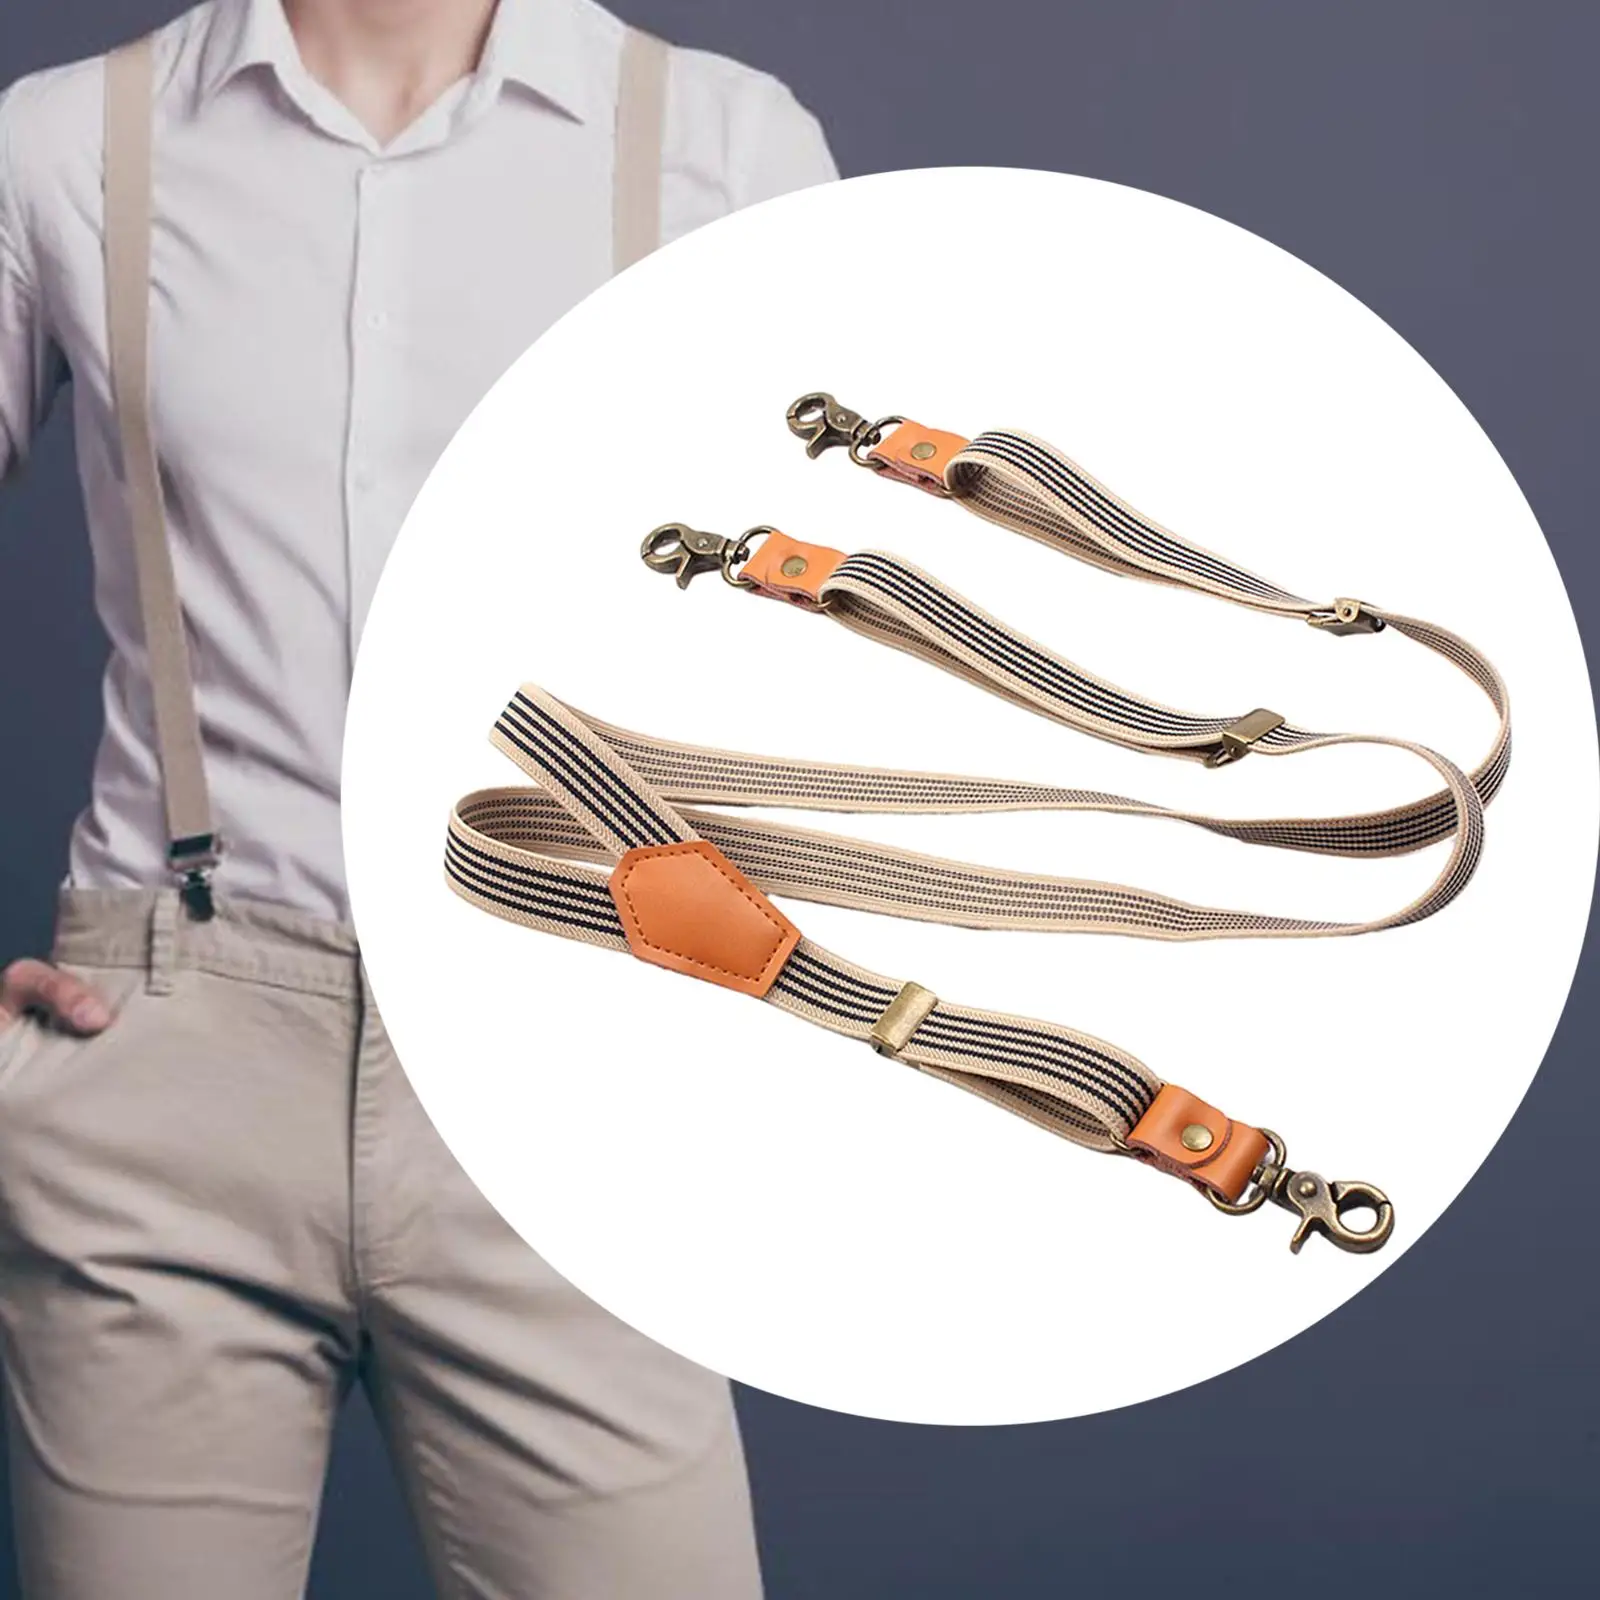 Suspenders for Men, Fashion Adjustable Braces, Elastic Swivel Hooks, Heavy Duty Y Back Construction Pants Braces for Work